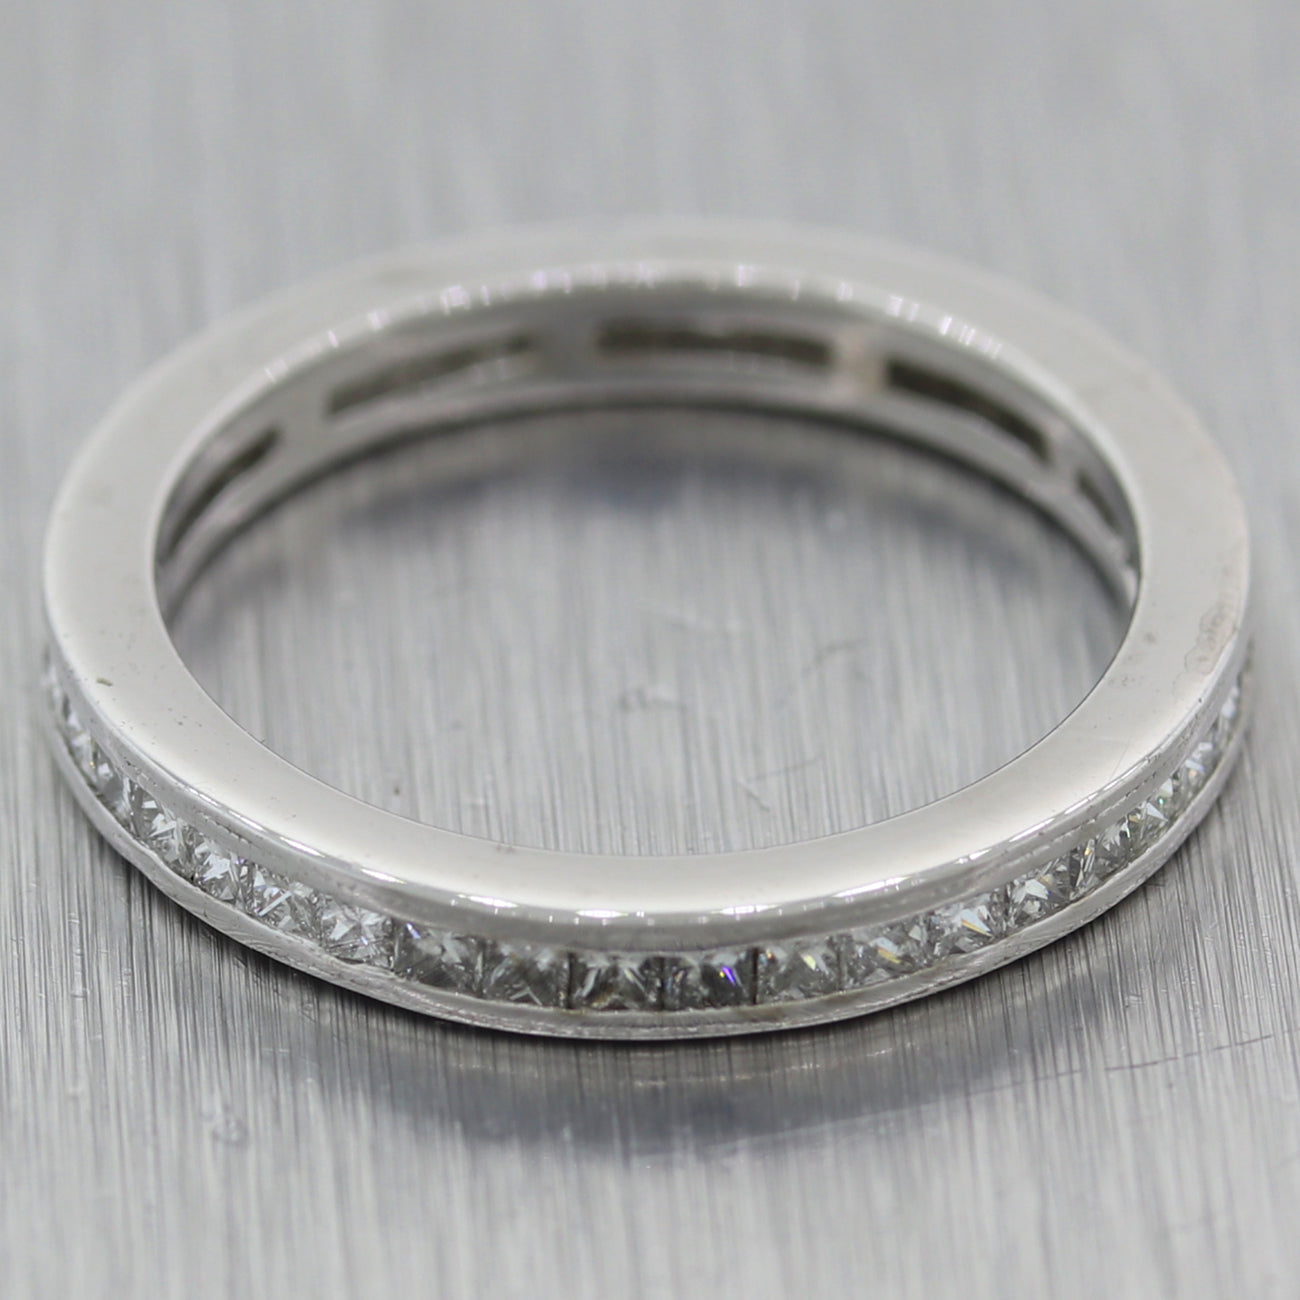 Modern Platinum 0.84ctw Princess Cut Diamond Wedding Band Ring